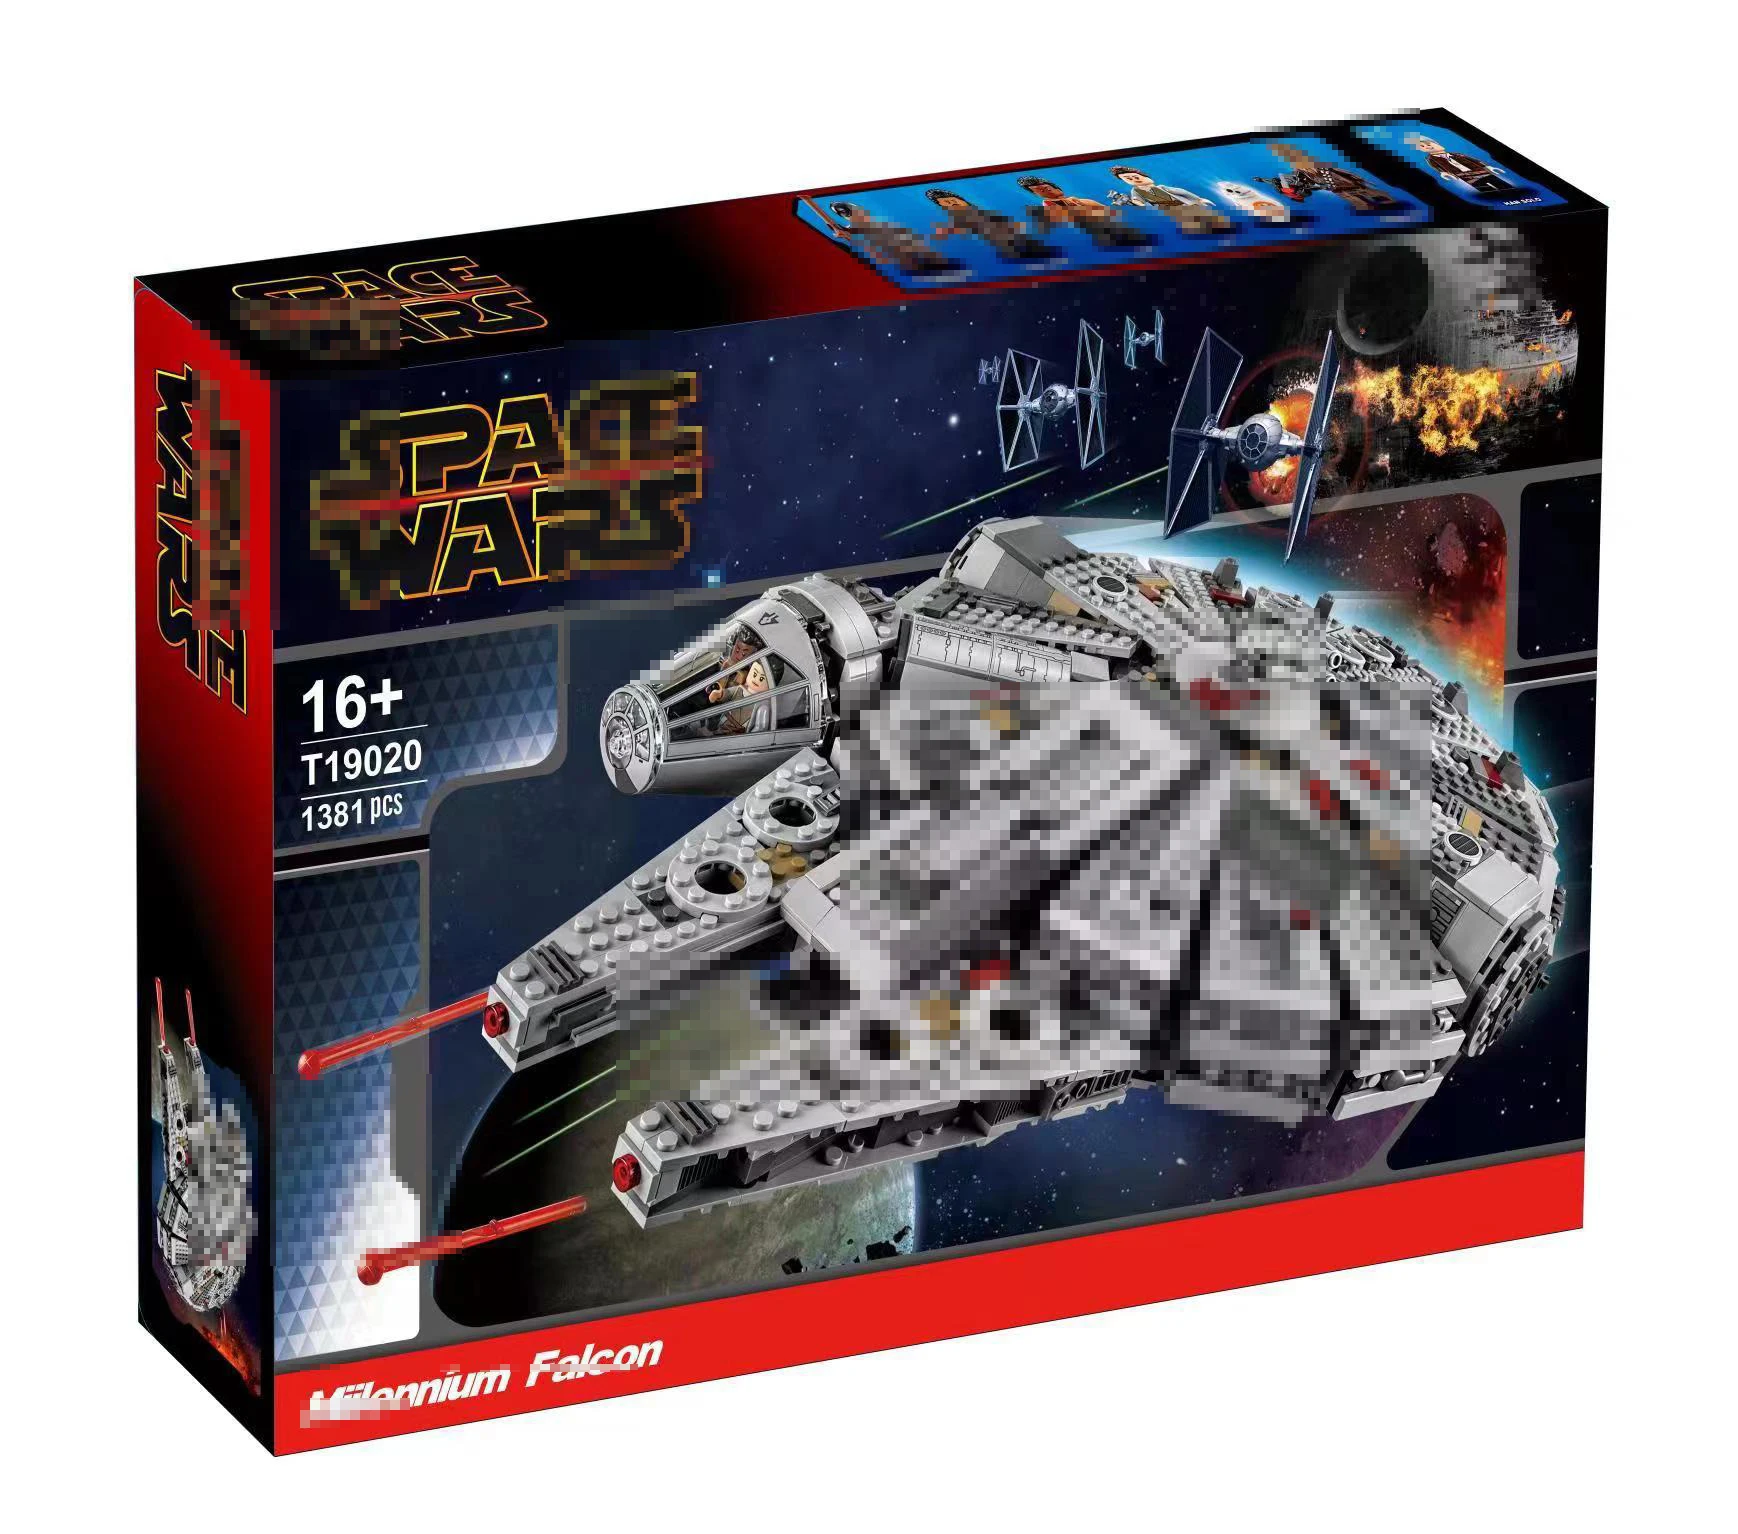 

1380pcs Millennium Falcon Toy bricks Star Plane Wars building block for kids model gift Legendary Series The Force Awakens